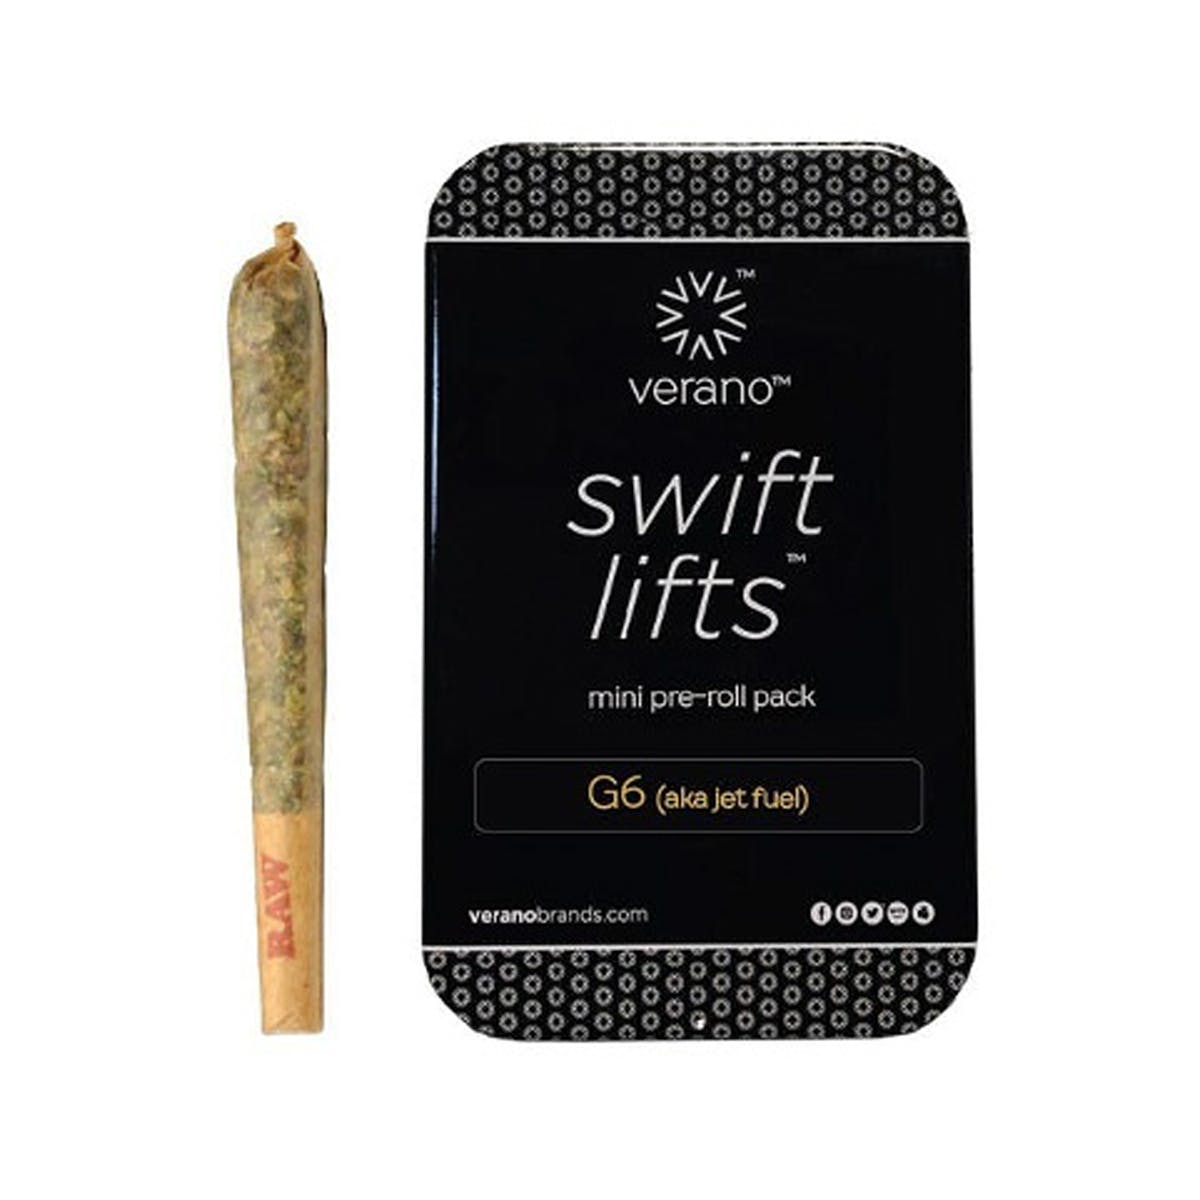 marijuana-dispensaries-potomac-holistics-in-rockville-swift-liftsa-c2-84c-mini-pre-roll-pack-g6-jet-fuel